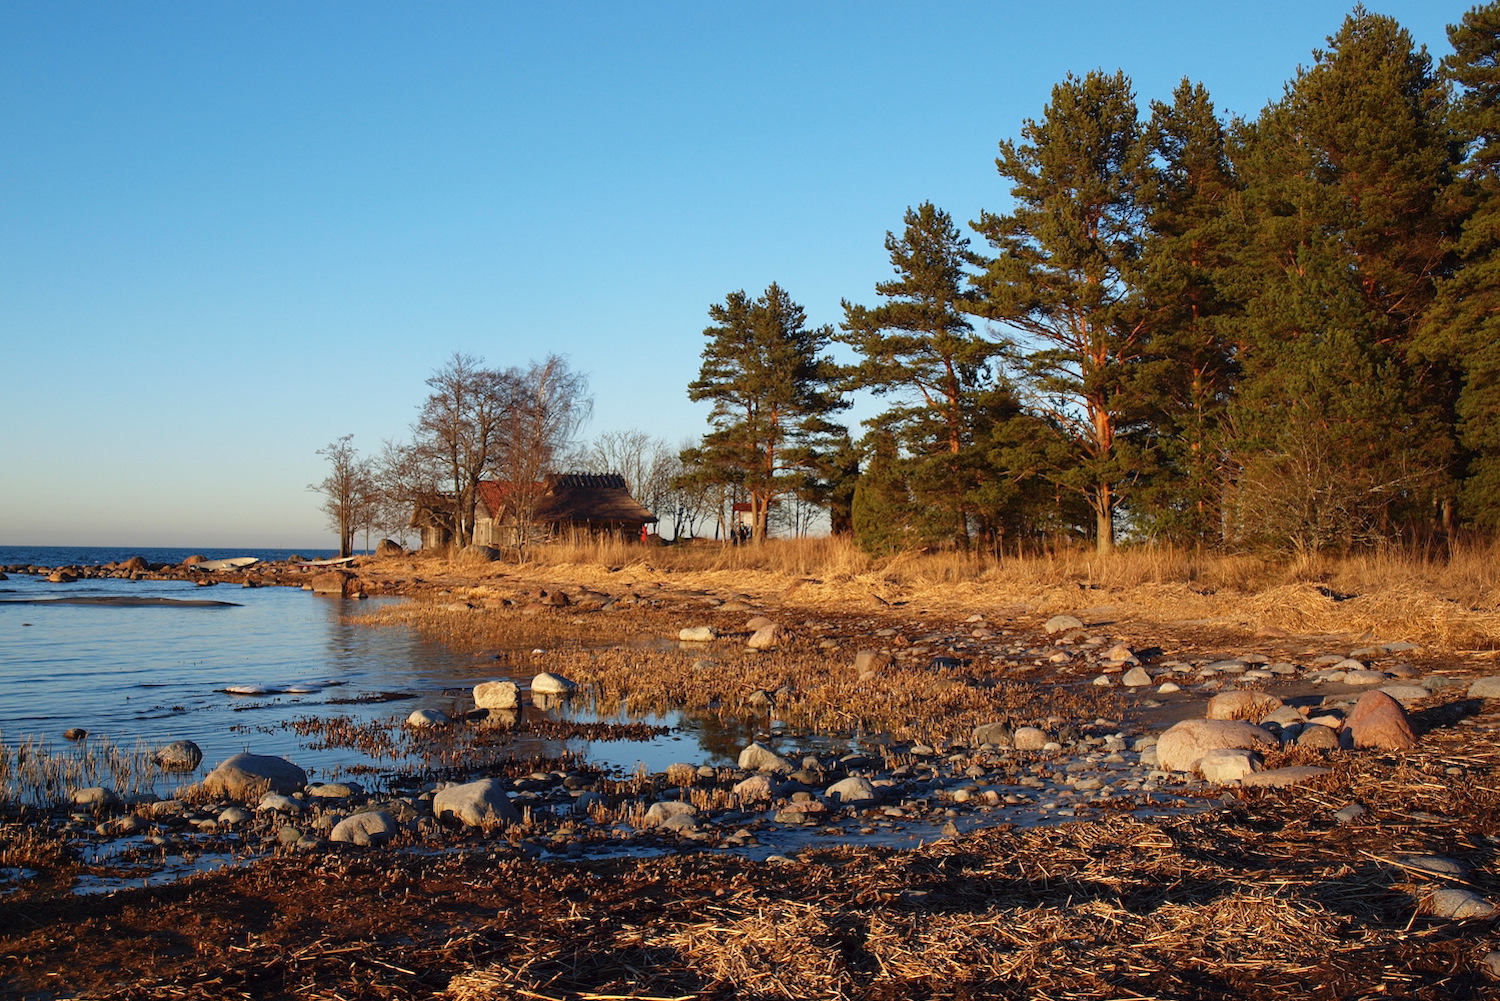 The village of Altja, in northern Estonia. Image: Anita under a CC license